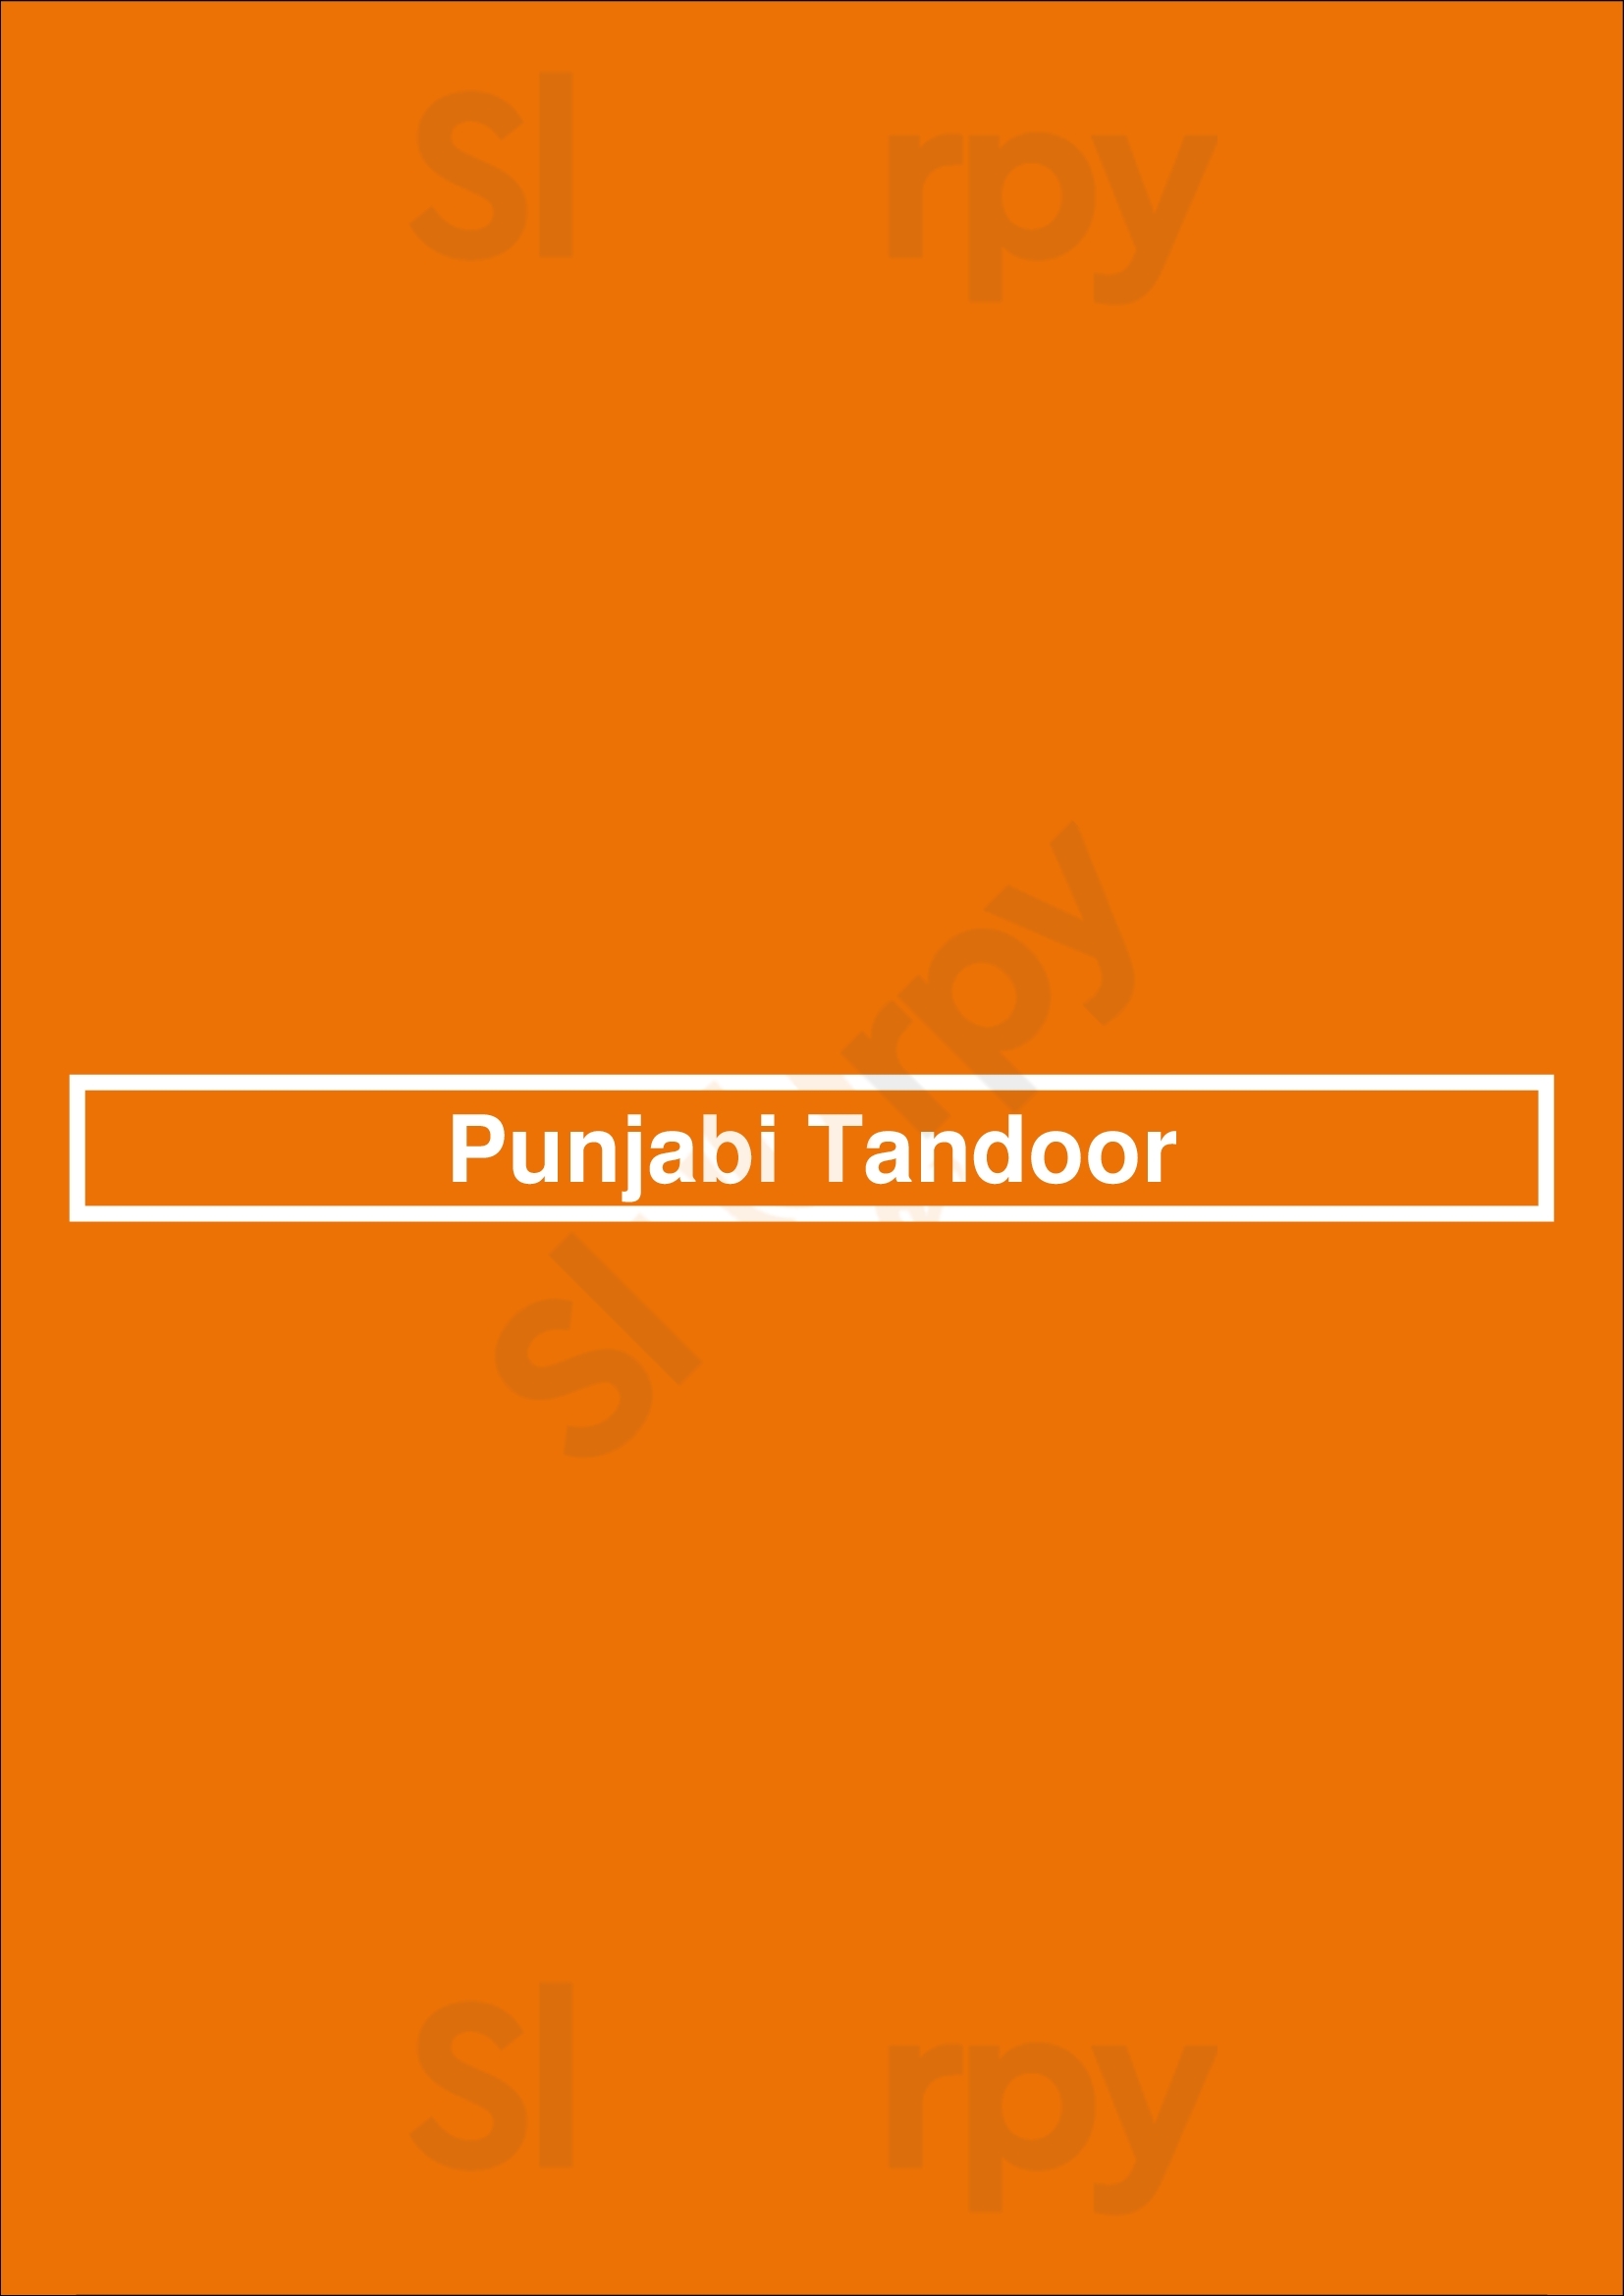 Punjabi Tandoor San Diego Menu - 1